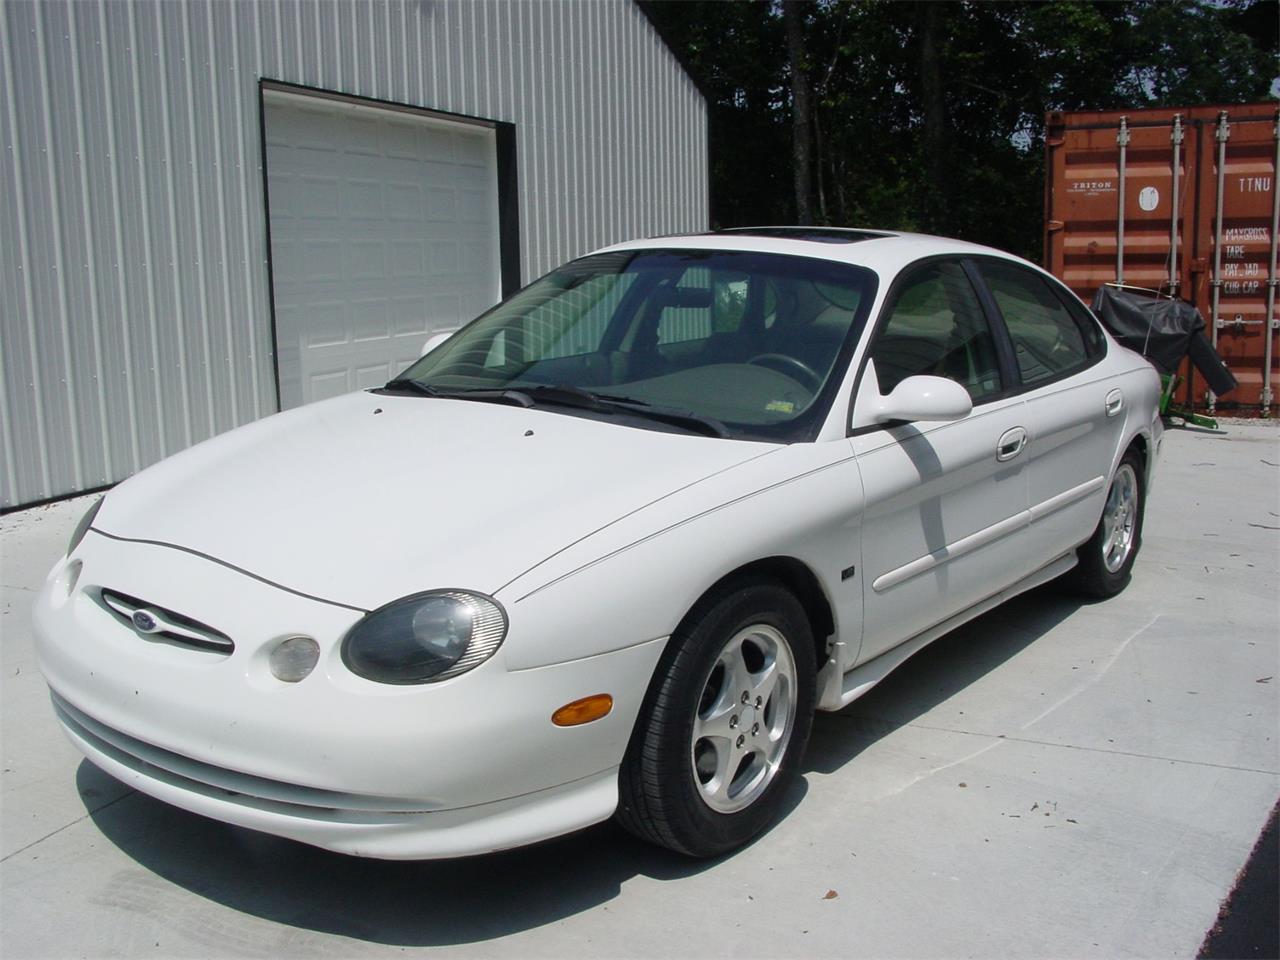 1999 Ford Taurus for Sale | ClassicCars.com | CC-1602138